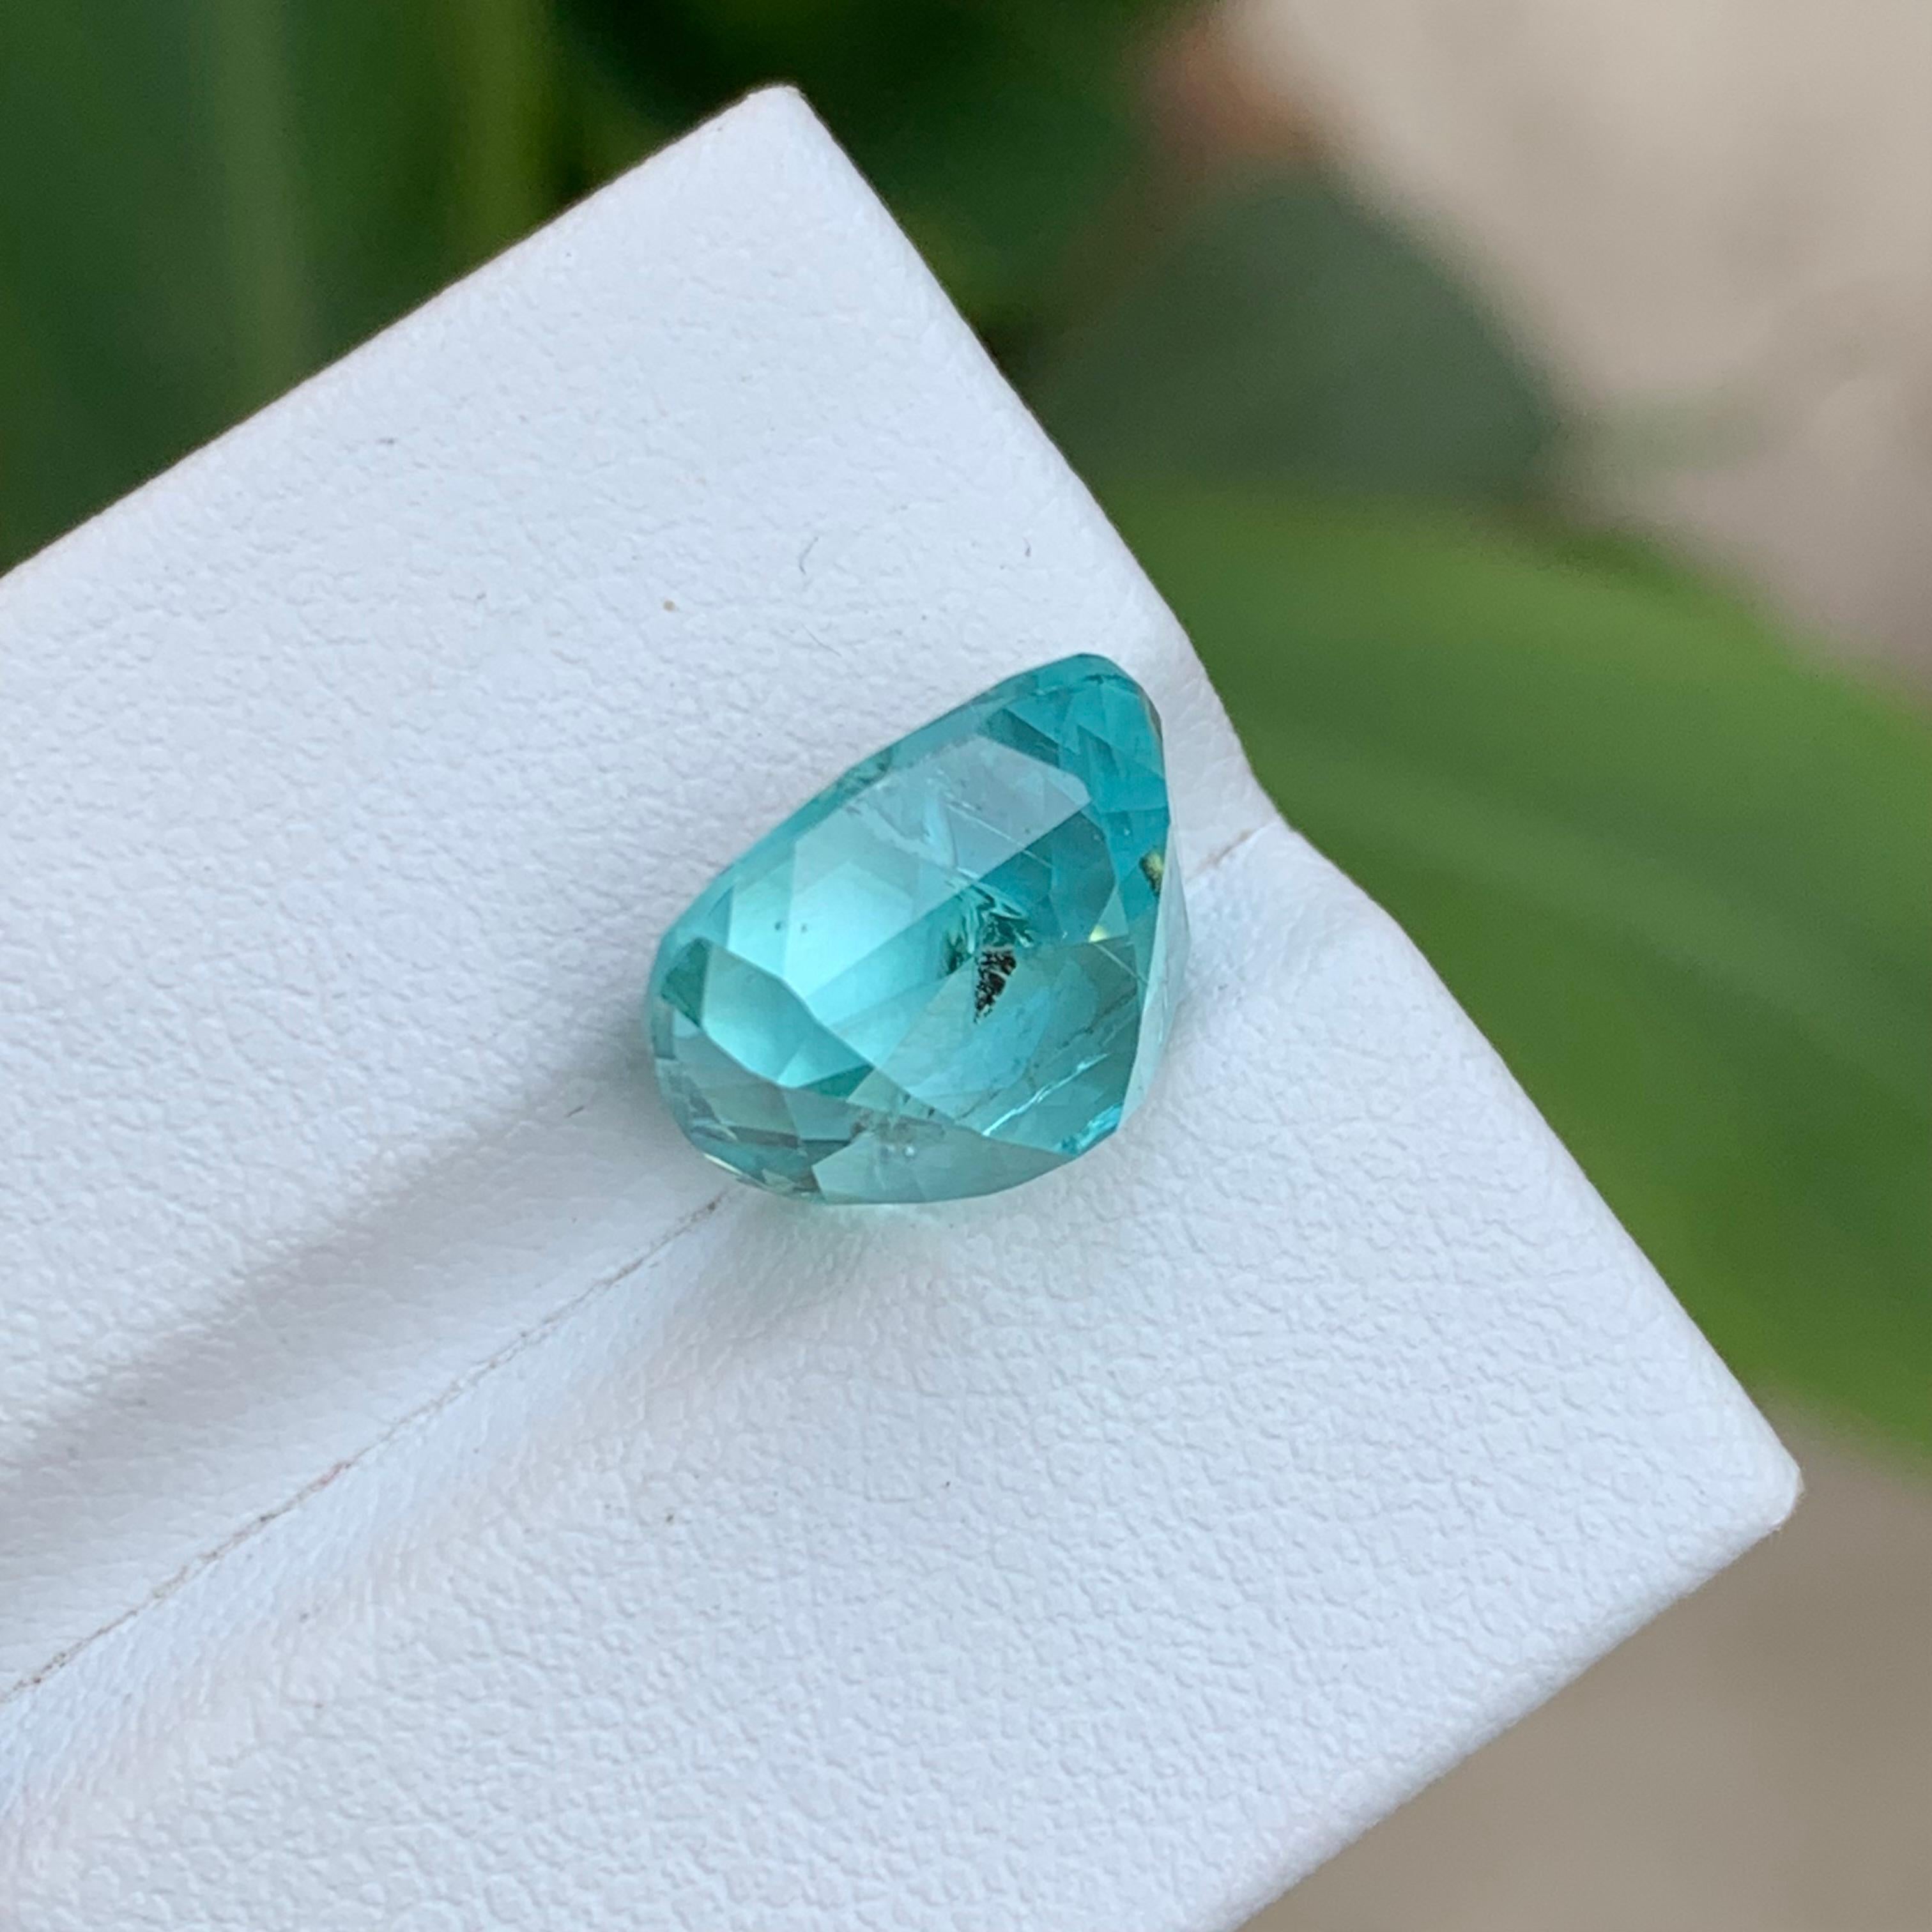 Rare Seafoam Blue Natural Tourmaline Gemstone7.75Ct Cushion Cut for Ring/Jewelry For Sale 1